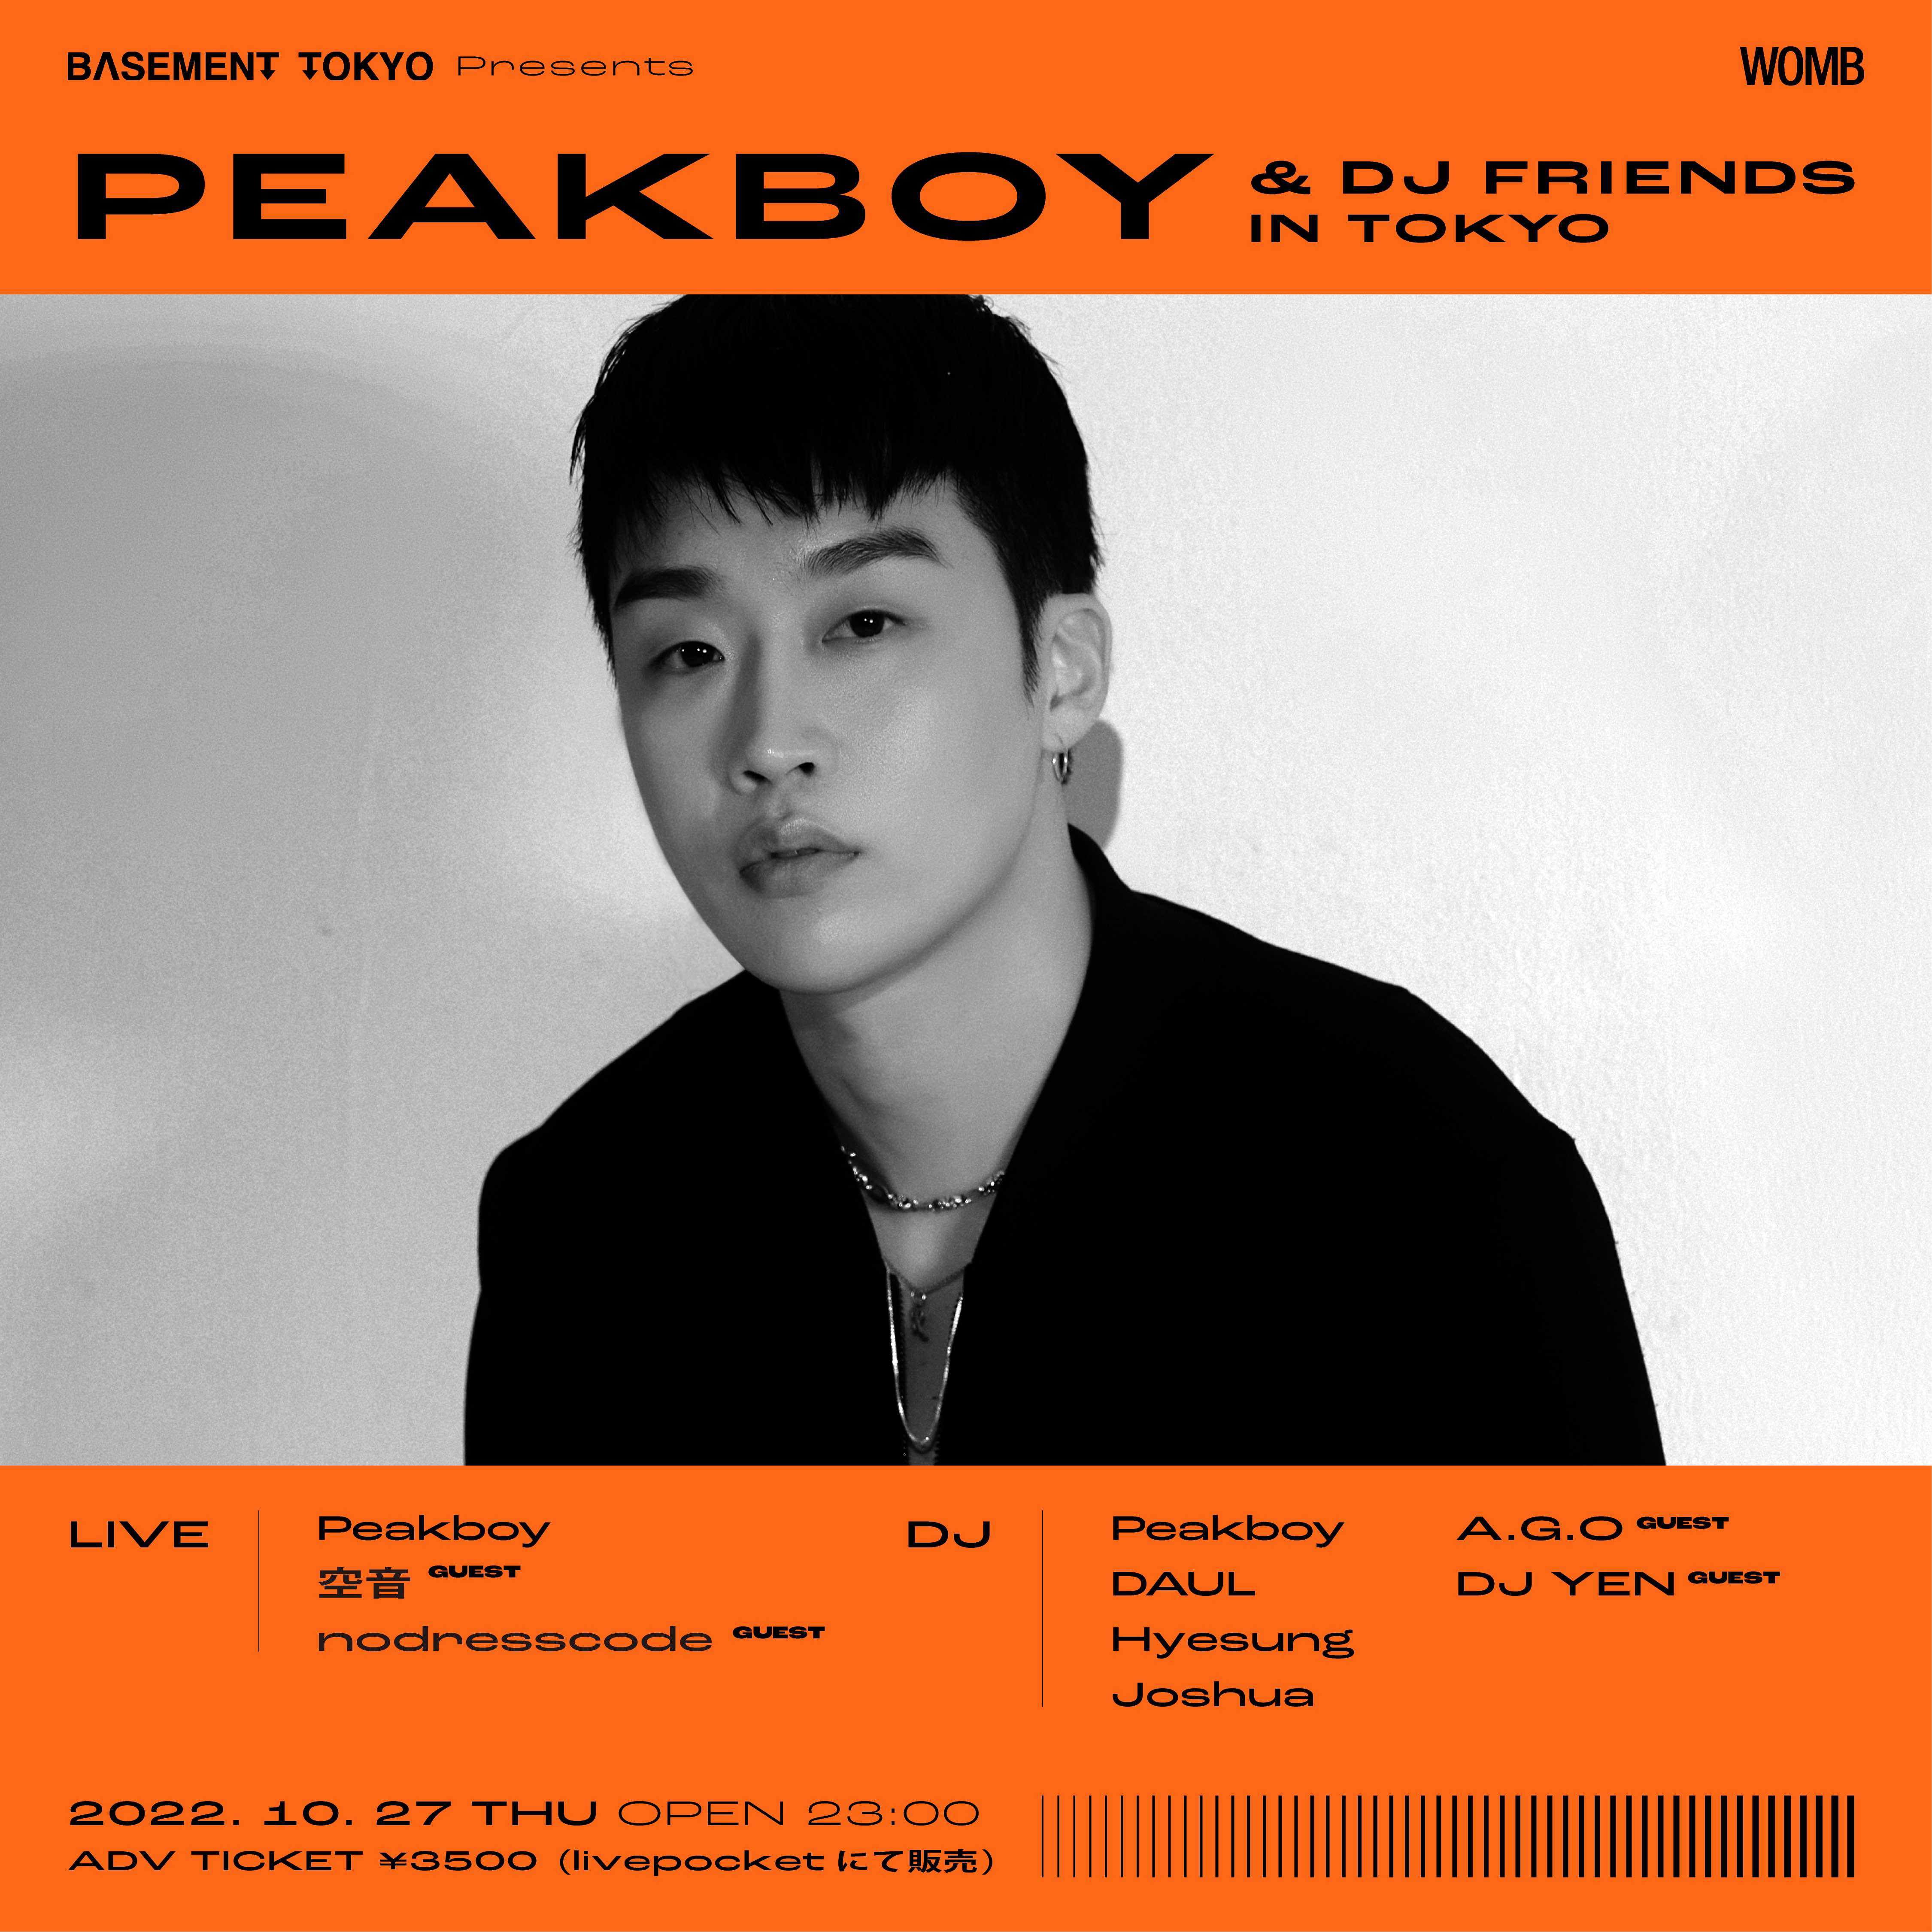 Peakboy & DJ Friends in Tokyo